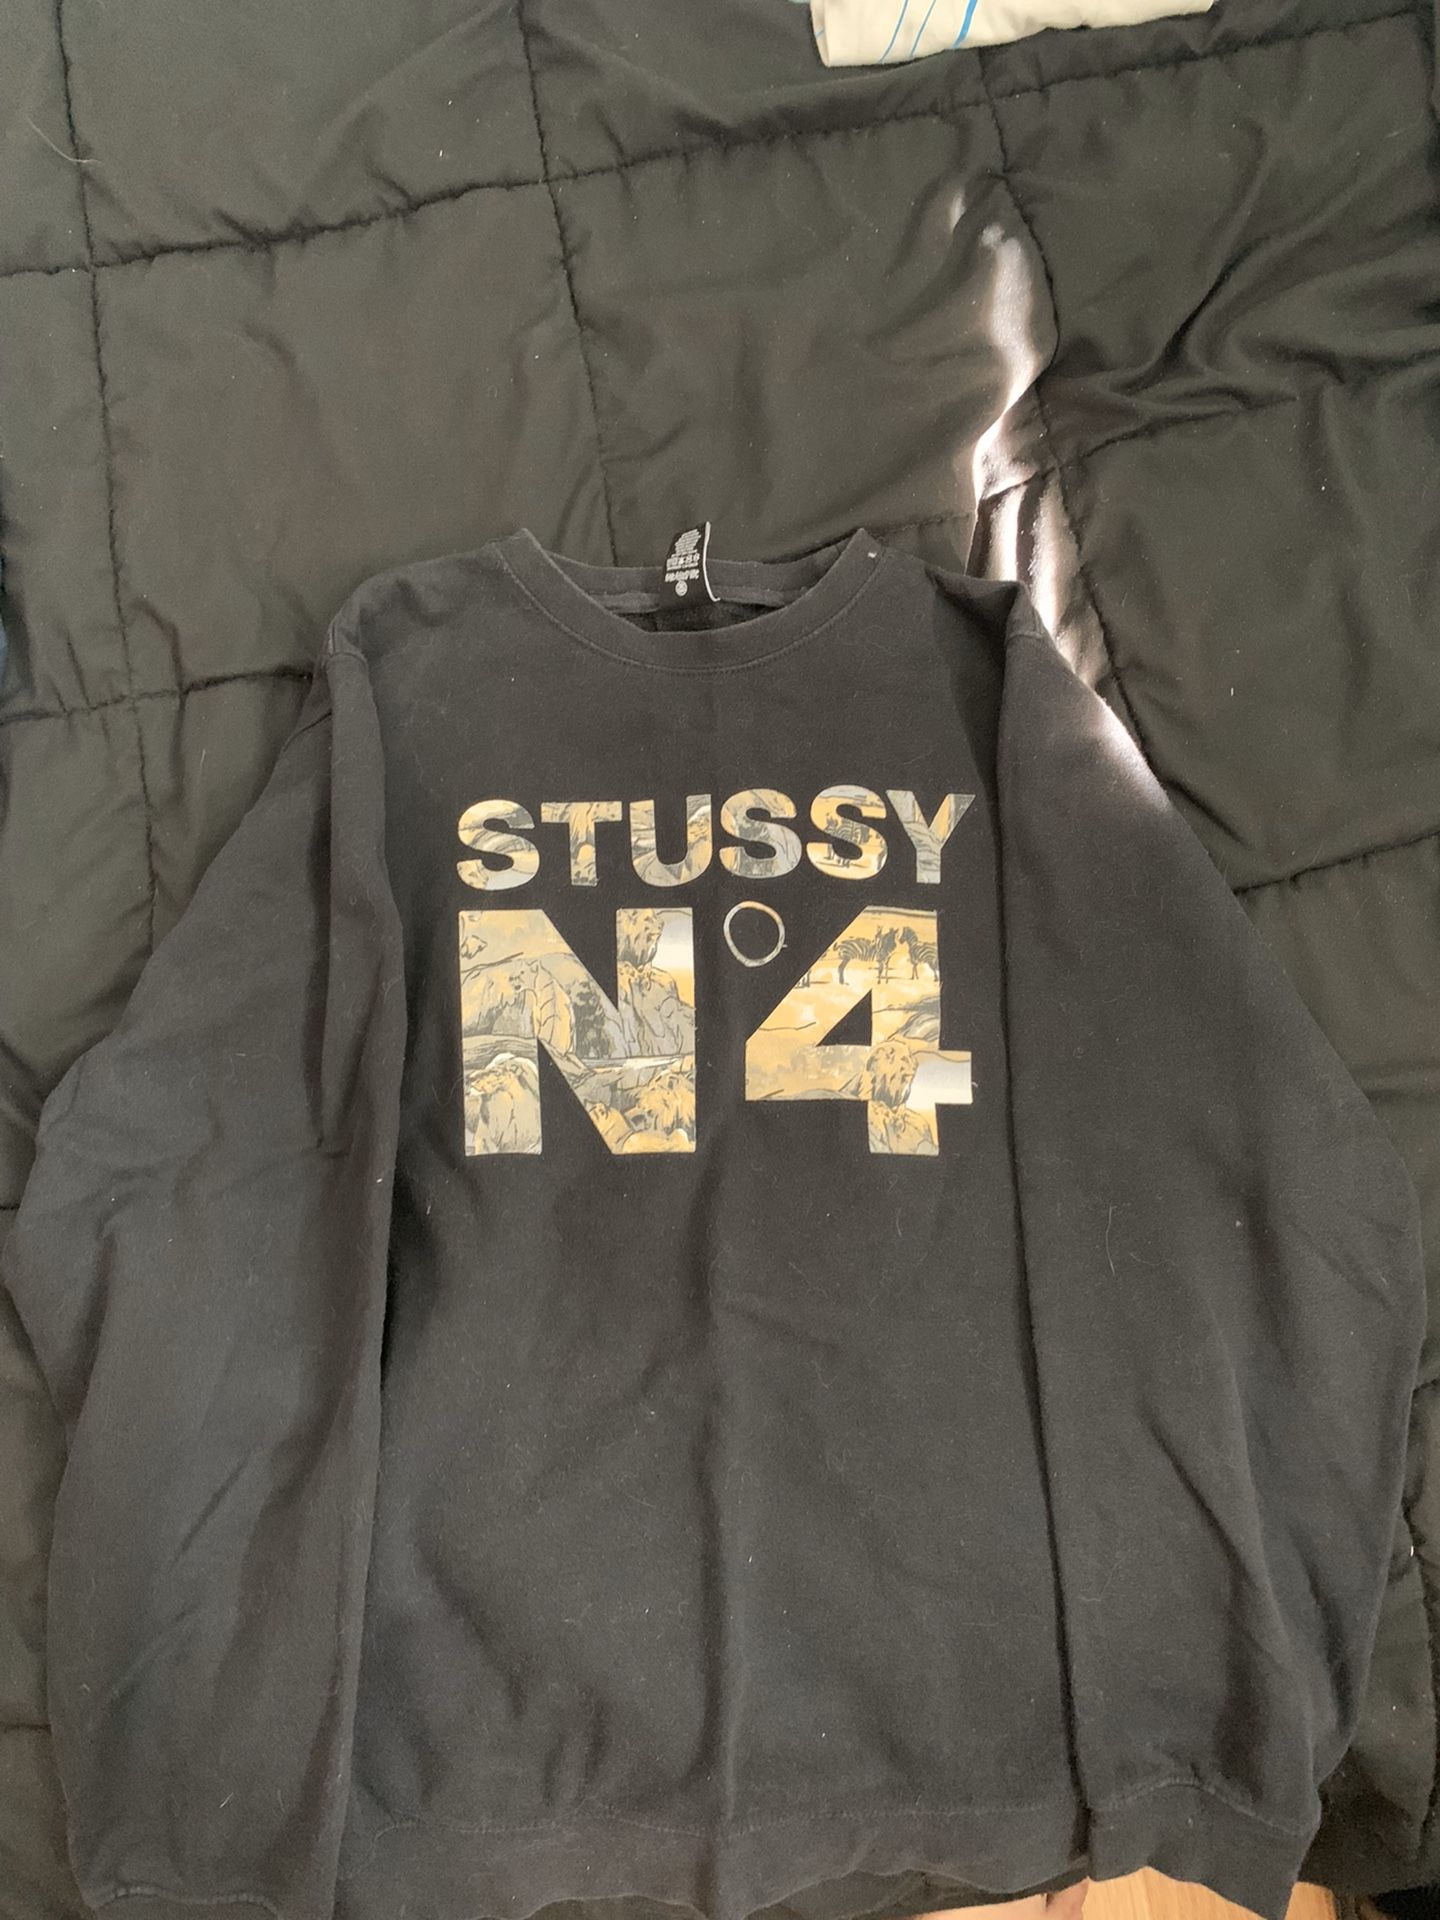 STUSSY SIZE LARGE / MEDIUM shirts crewneck sweaters tank top clothes